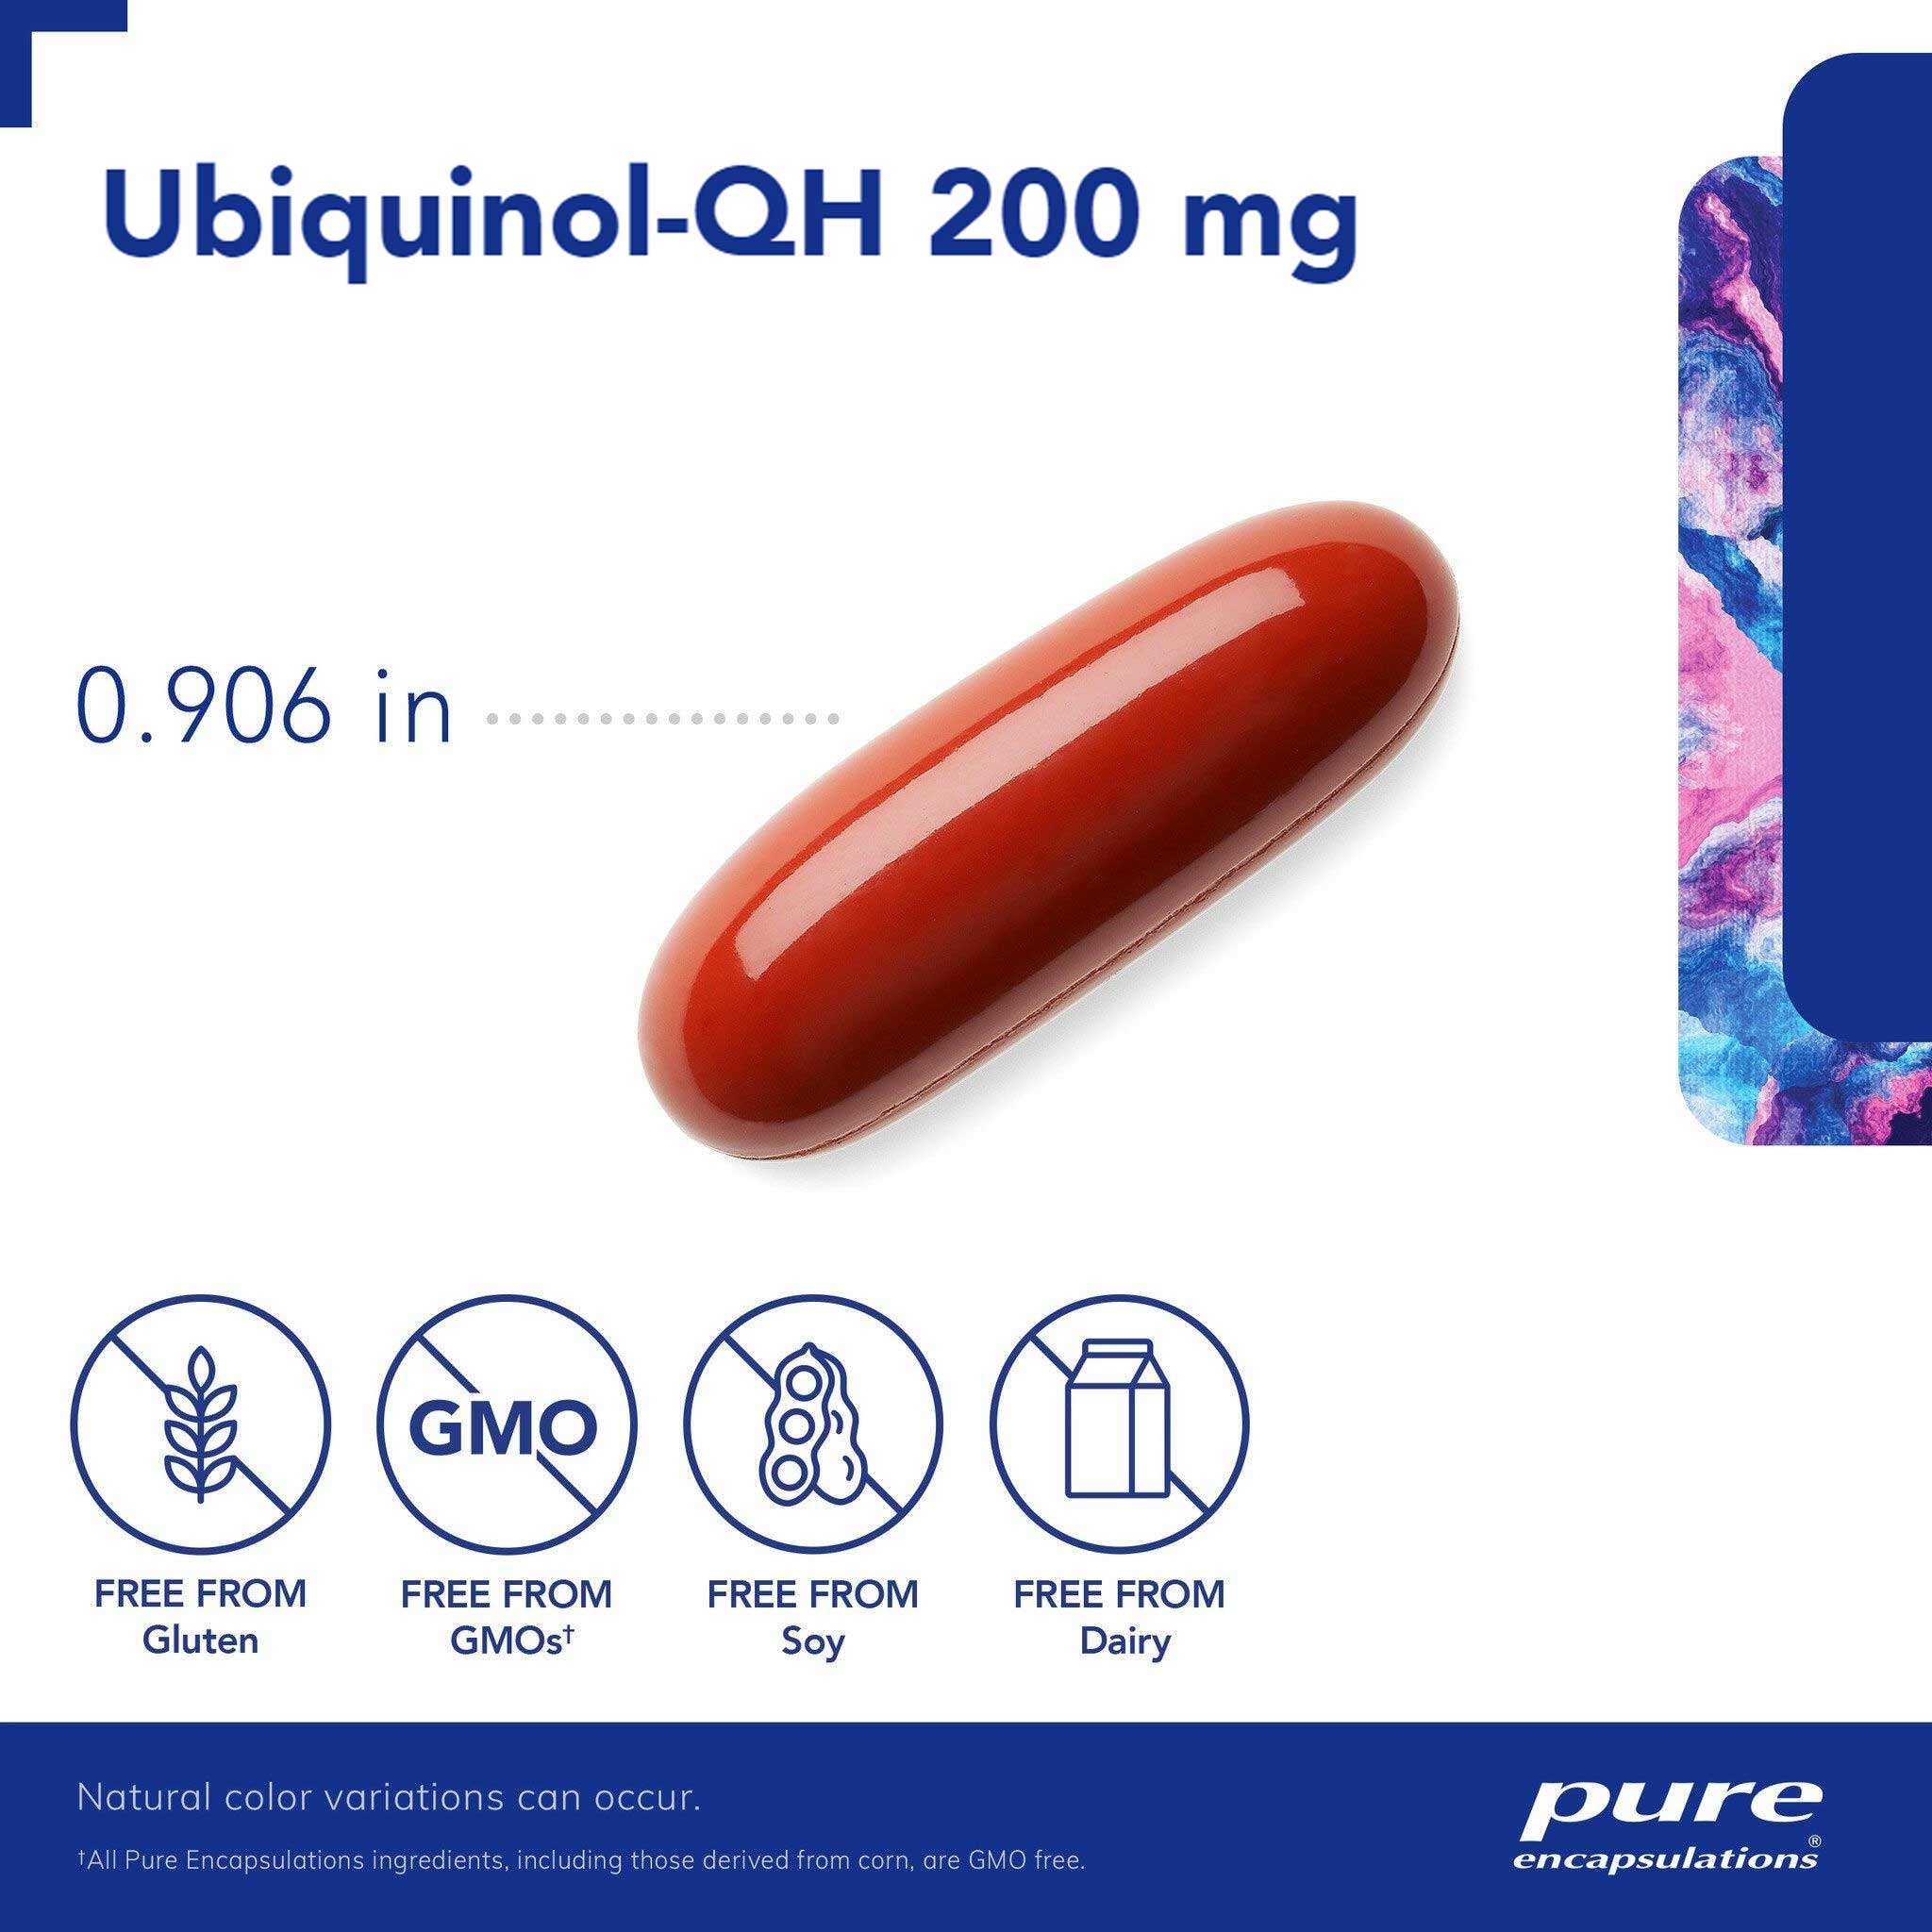 Pure Encapsulations Ubiquinol-QH 200mg Softgel Capsules